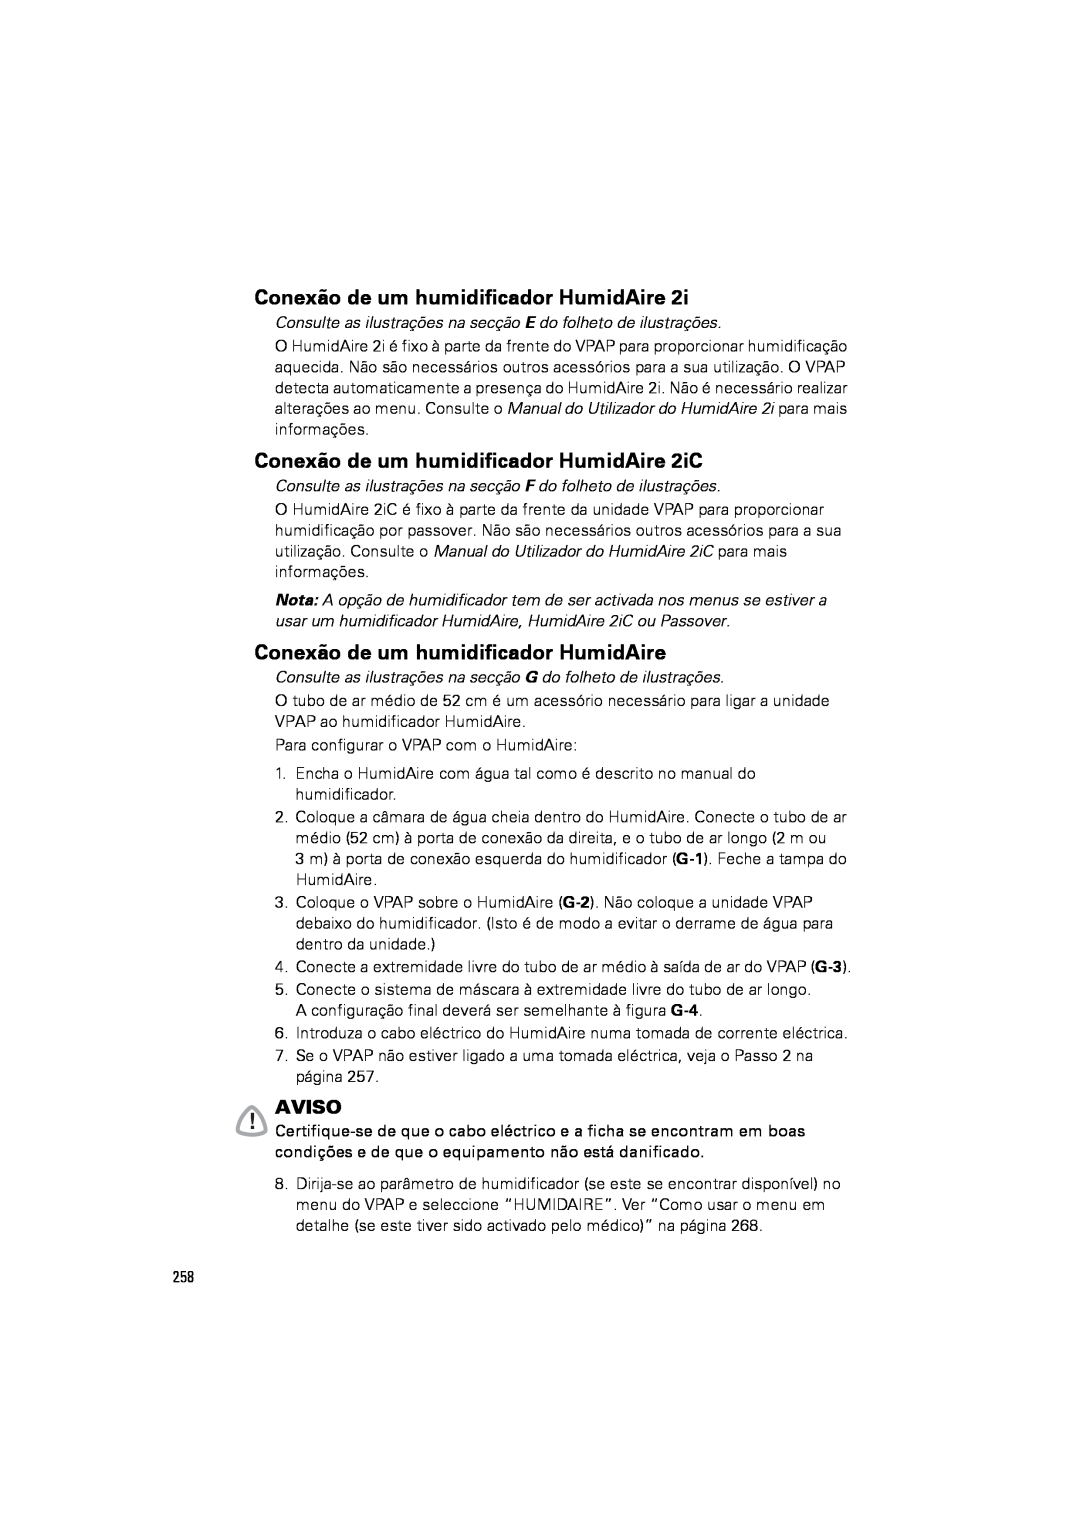 ResMed III & III ST user manual Conexão de um humidificador HumidAire 2iC, Aviso 